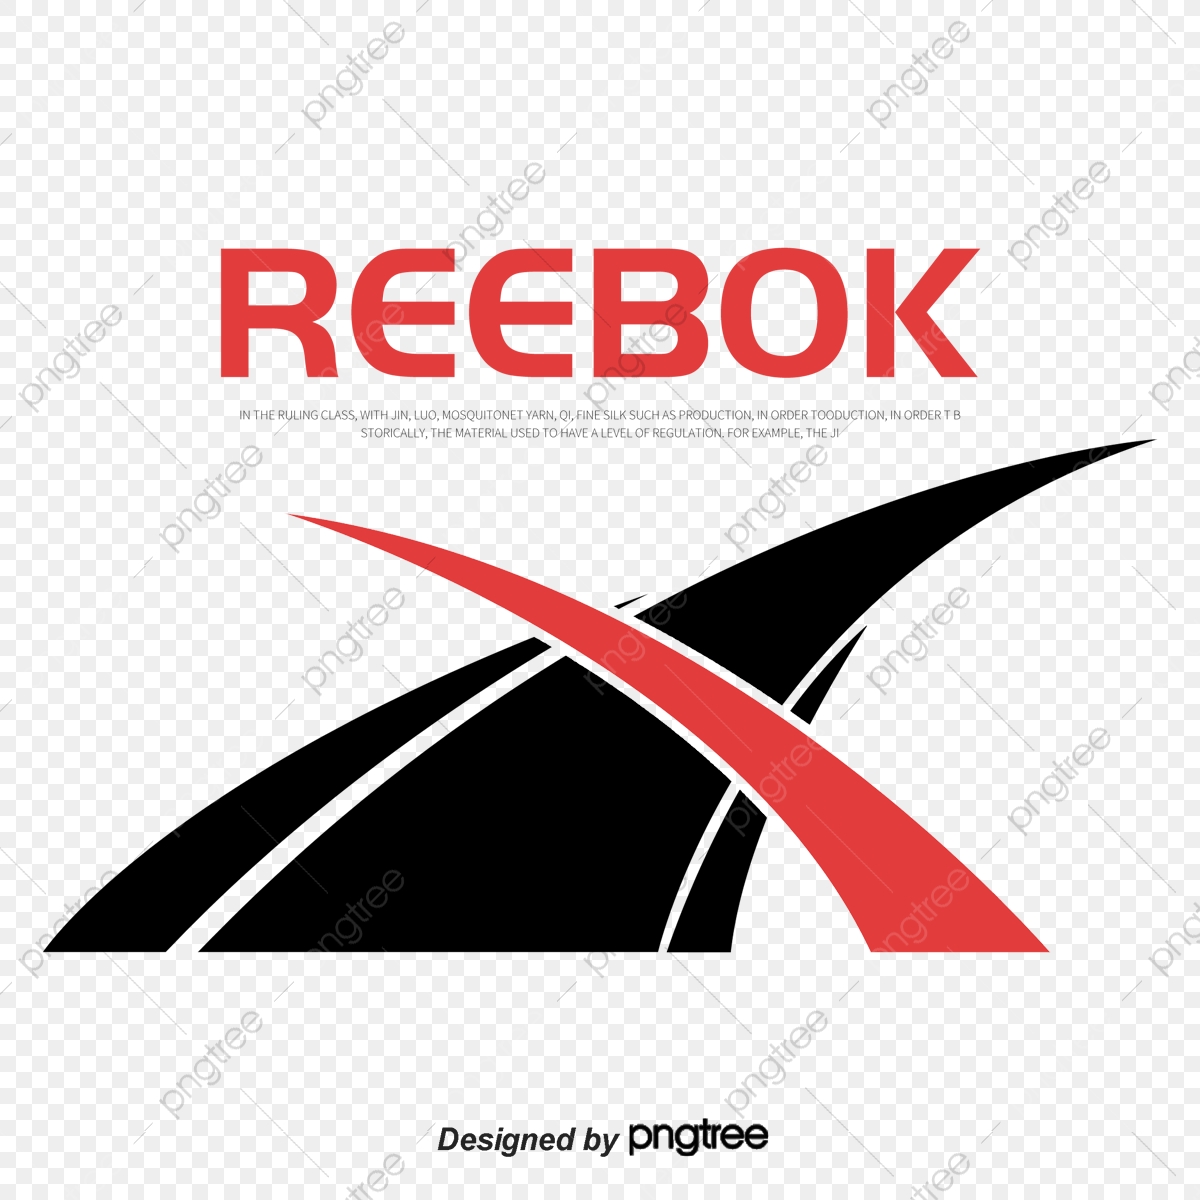 Reebok Logo Vector At Vectorified Com Collection Of Reebok Logo Vector Free For Personal Use